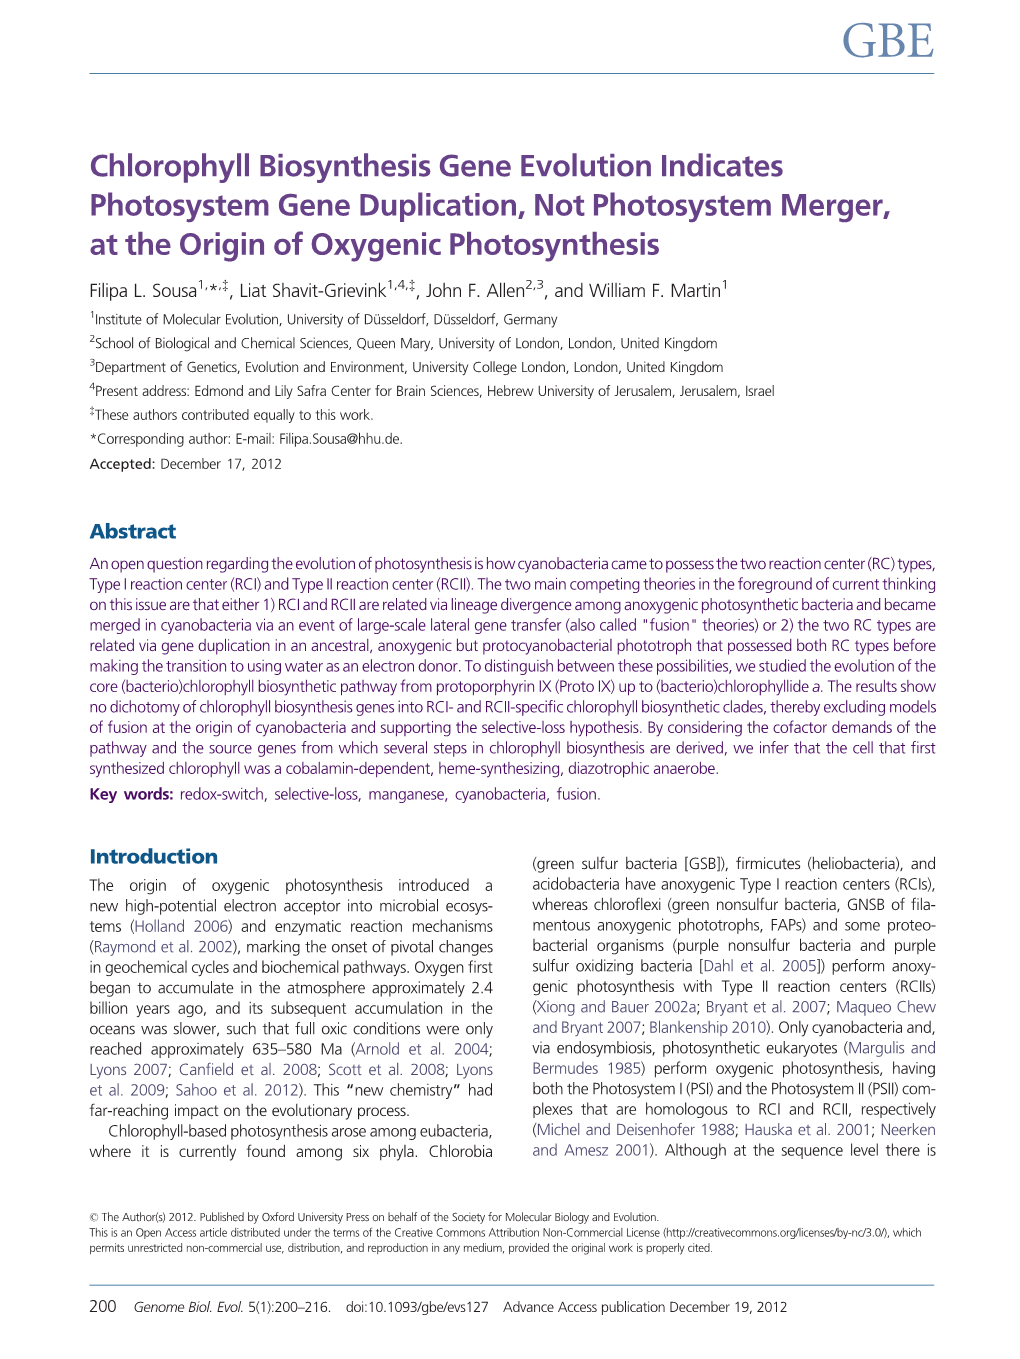 Chlorophyll Biosynthesis Gene Evolution Indicates Photosystem Gene Duplication, Not Photosystem Merger, at the Origin of Oxygenic Photosynthesis